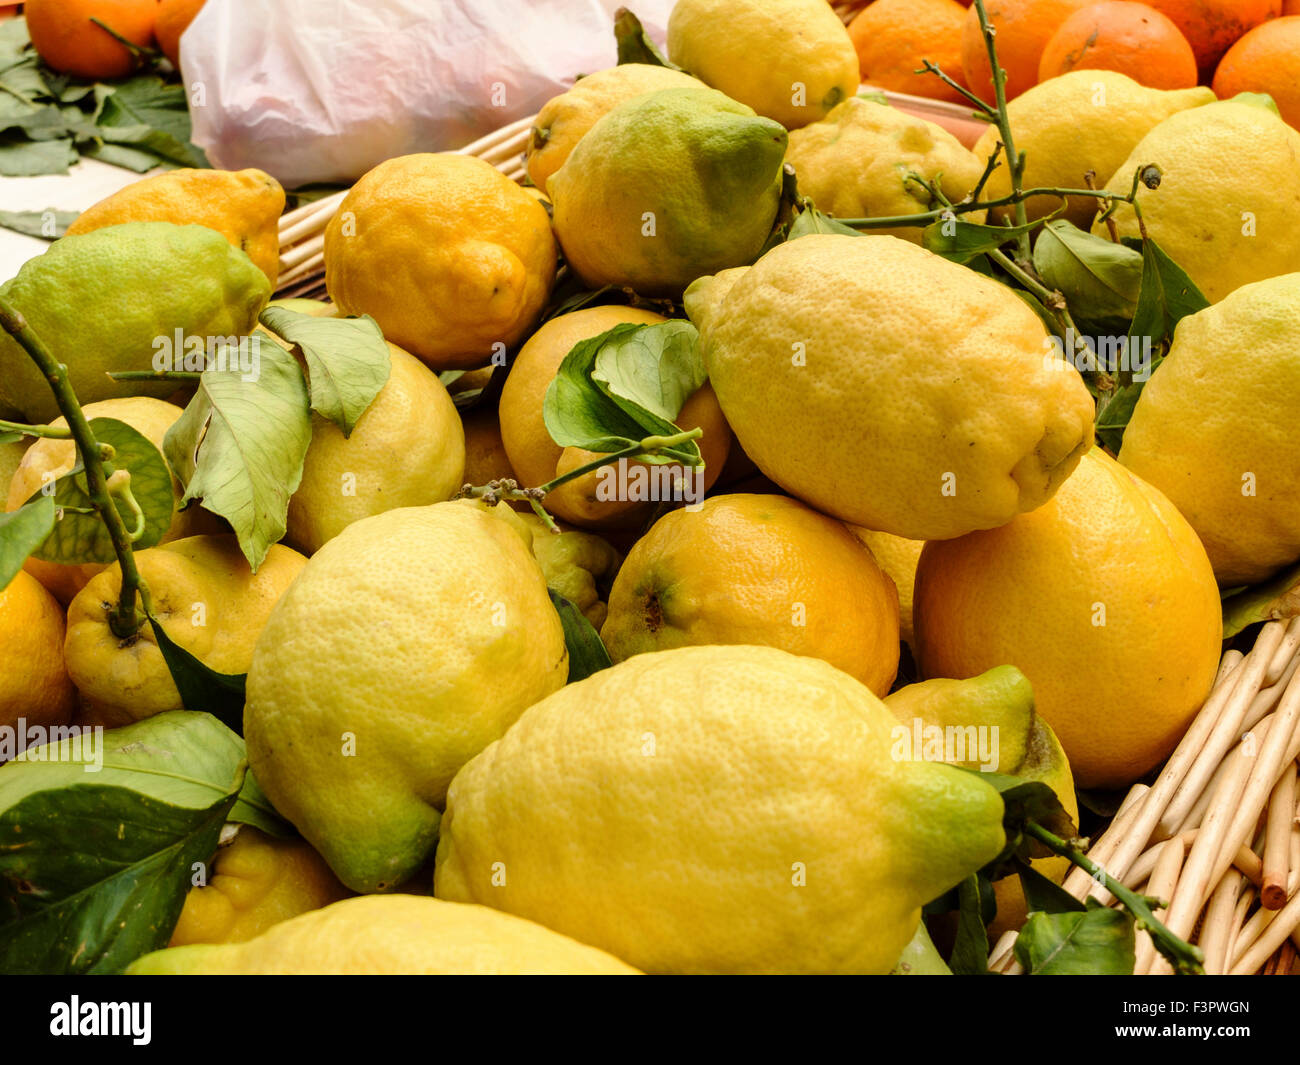 Italy, Emilia-Romagna, Urbino - the huge local lemons. Stock Photo